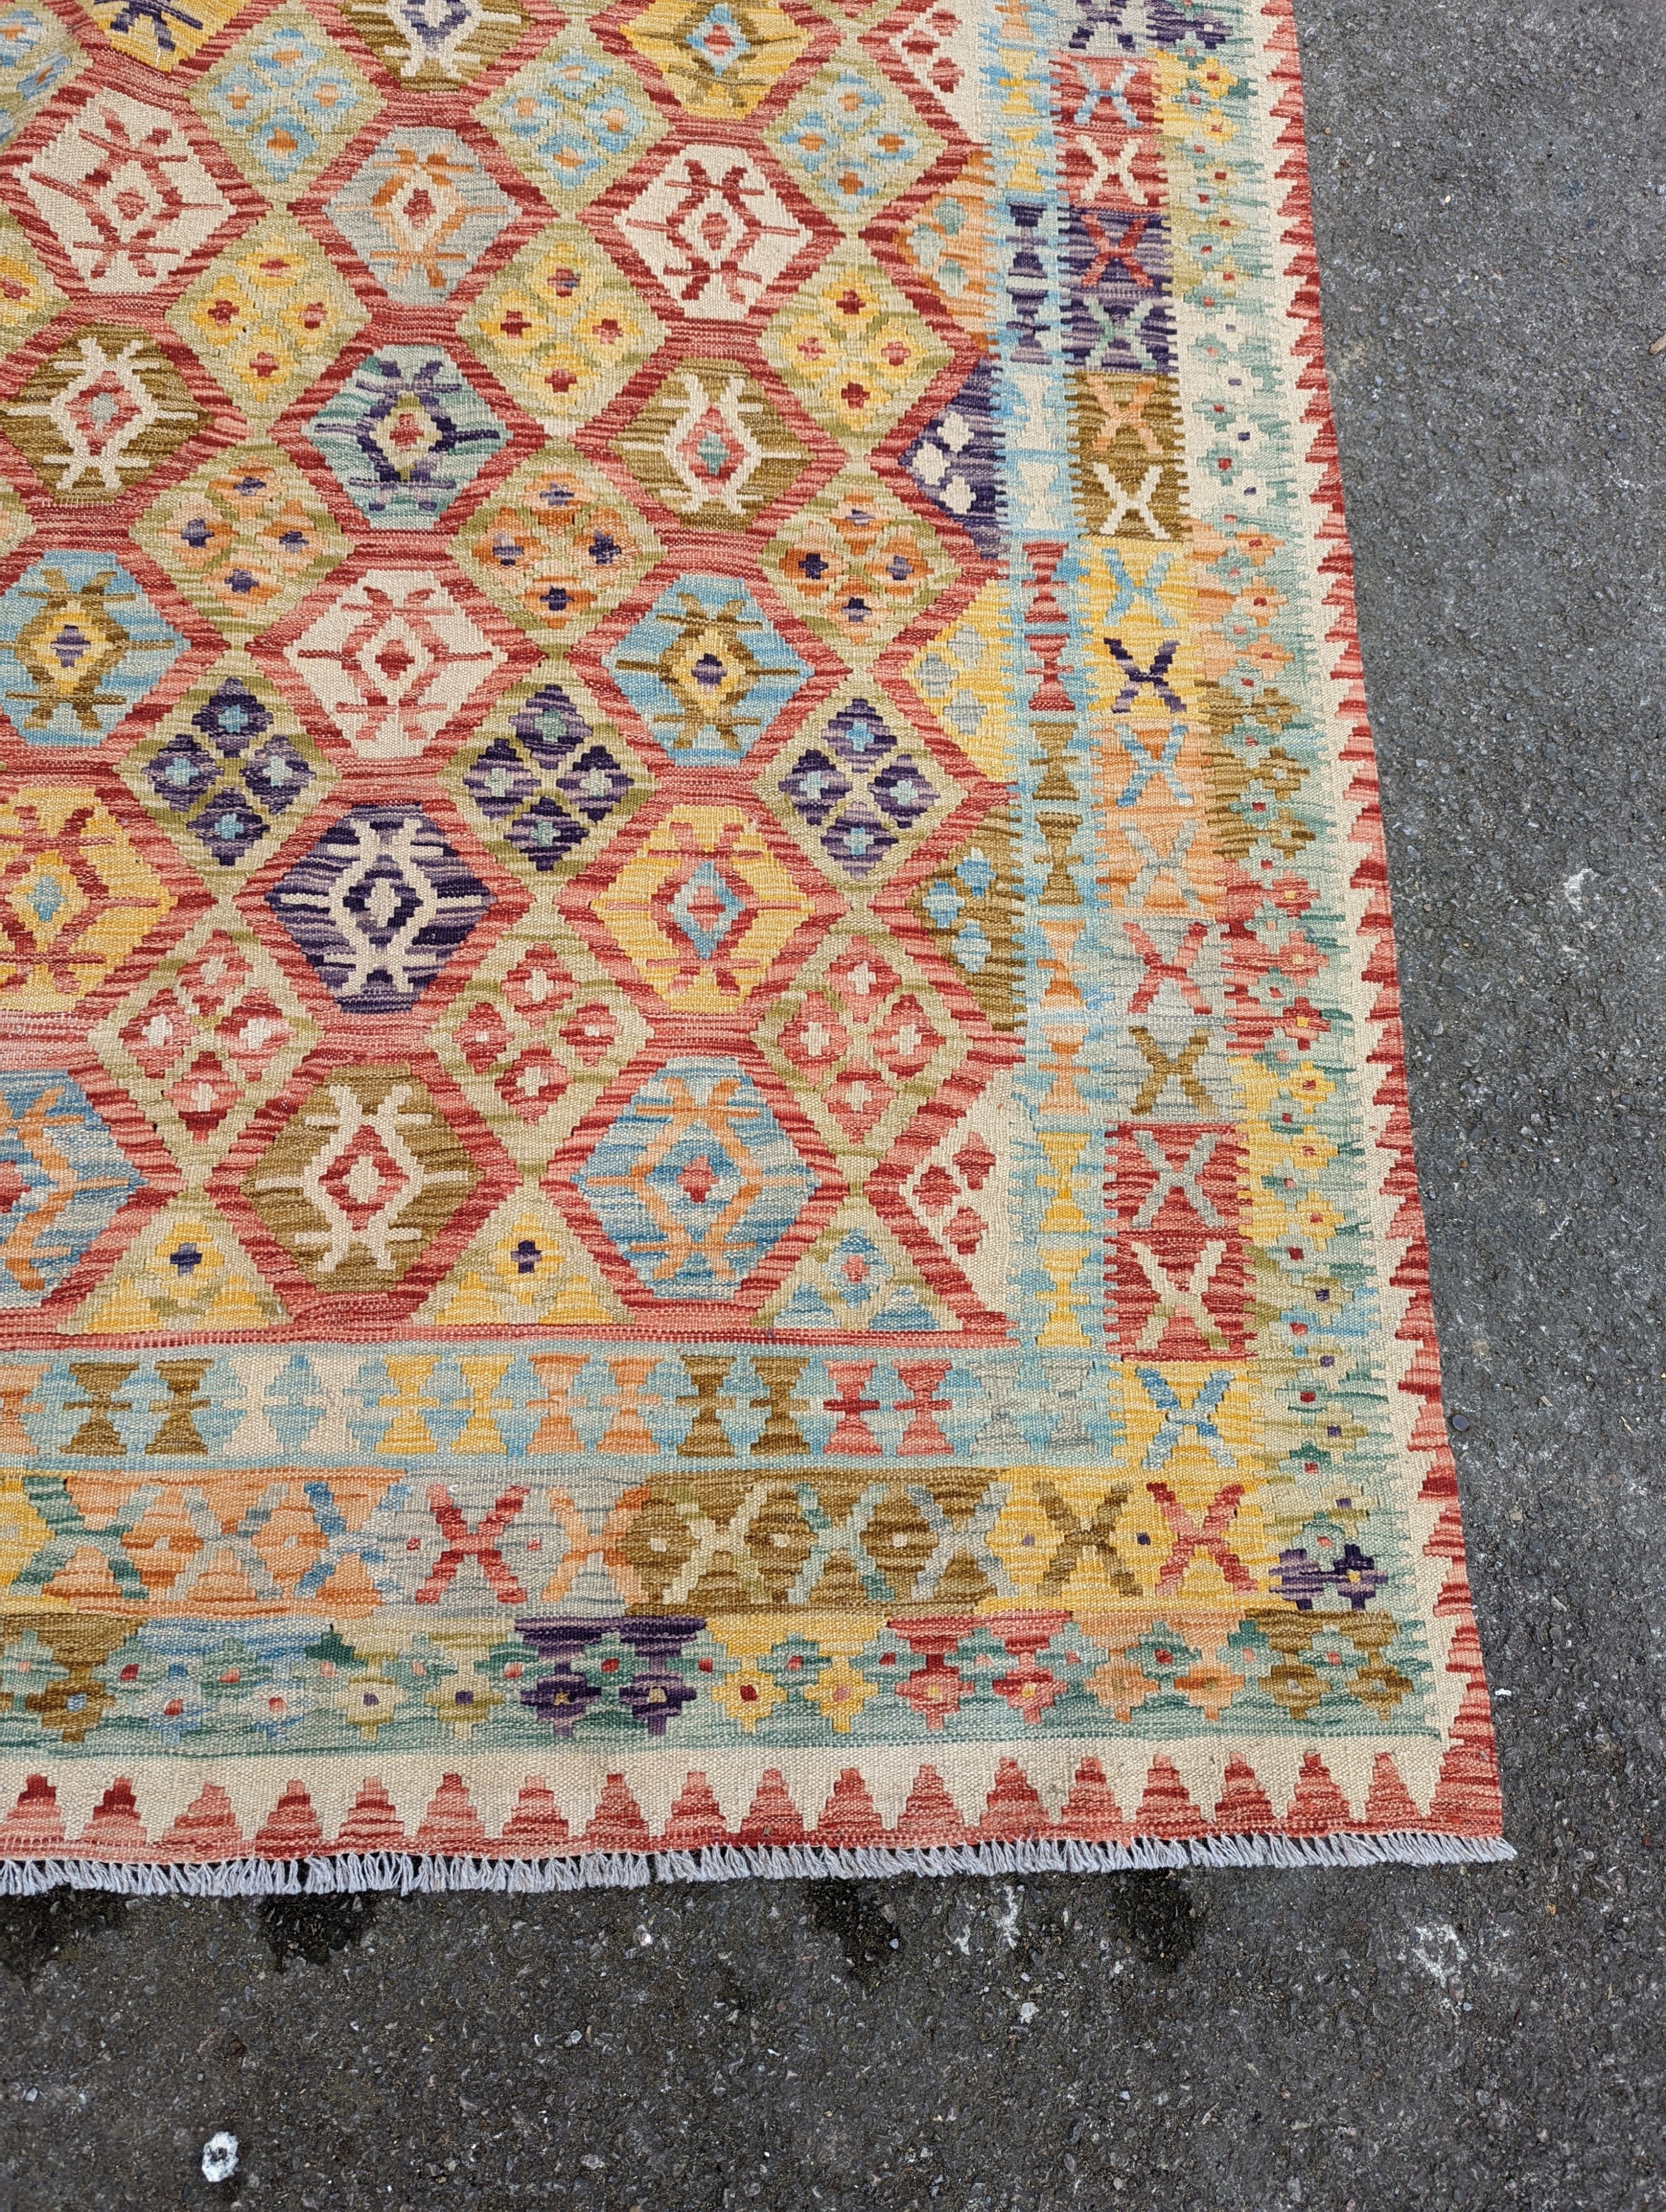 An Anatolian design Kilim carpet, approx. 200 x 160cm - Image 3 of 5